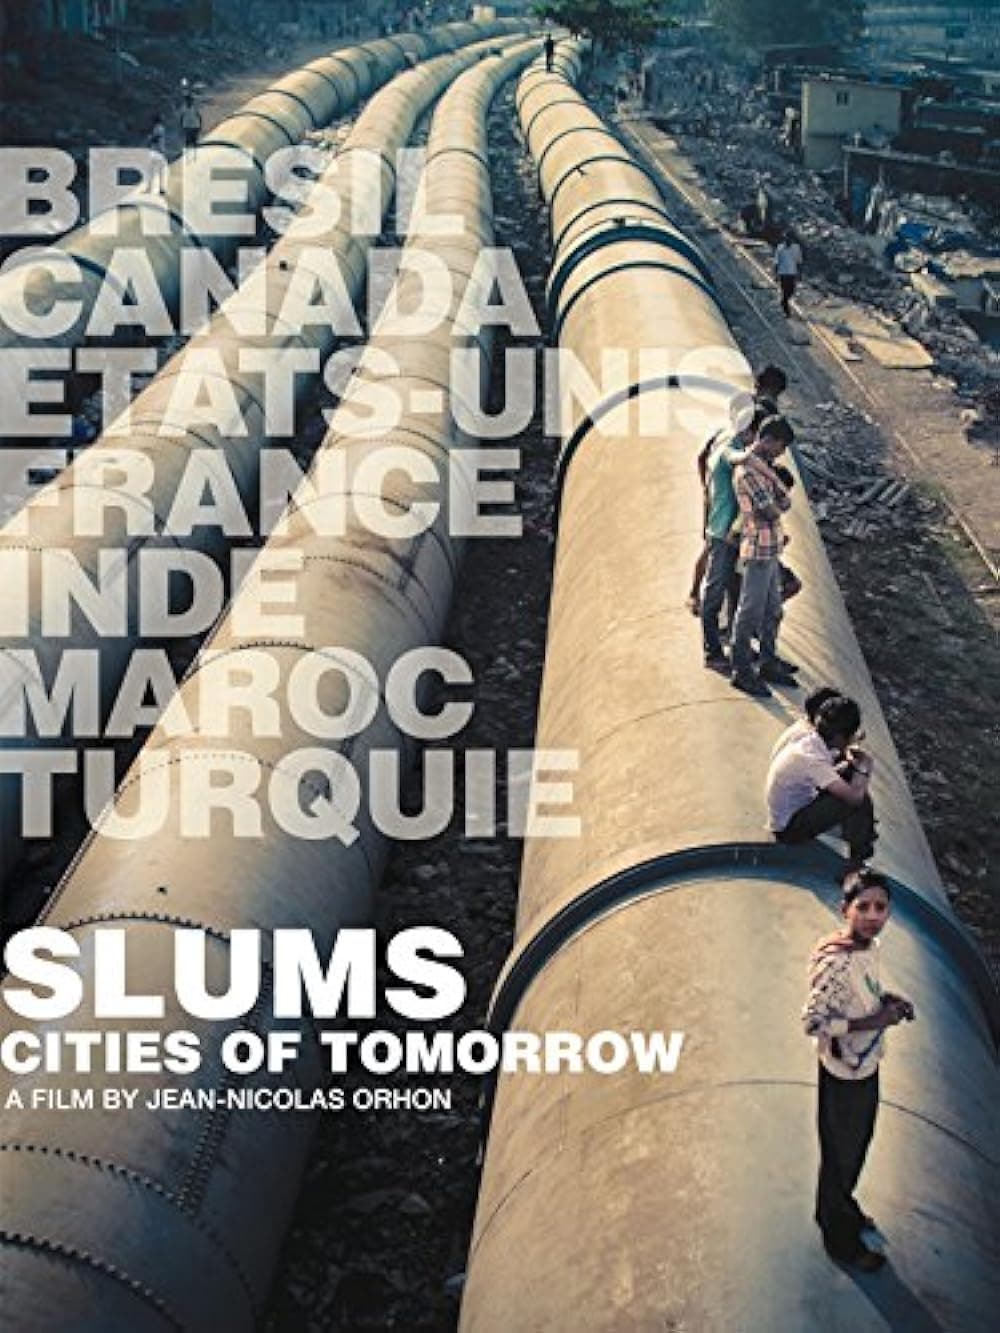 Slums: Cities of Tomorrow